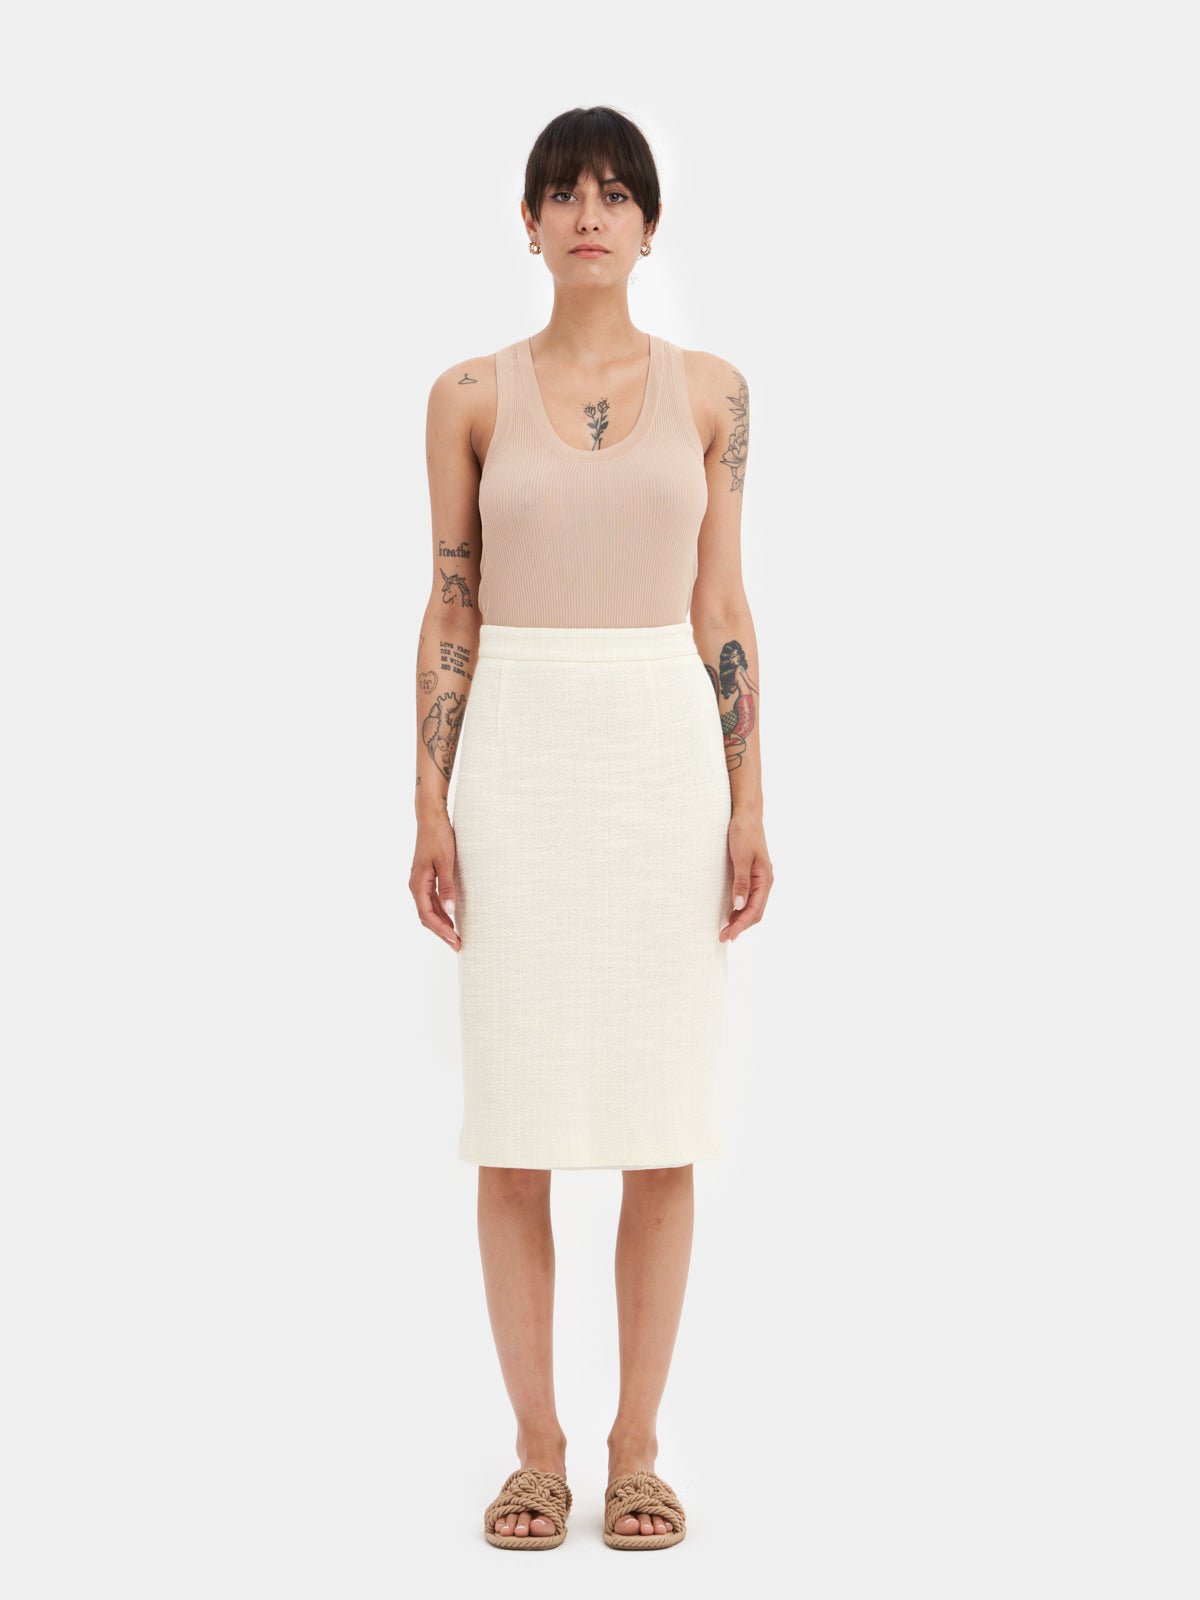 Longuette skirt made of 100% cotton 🍃